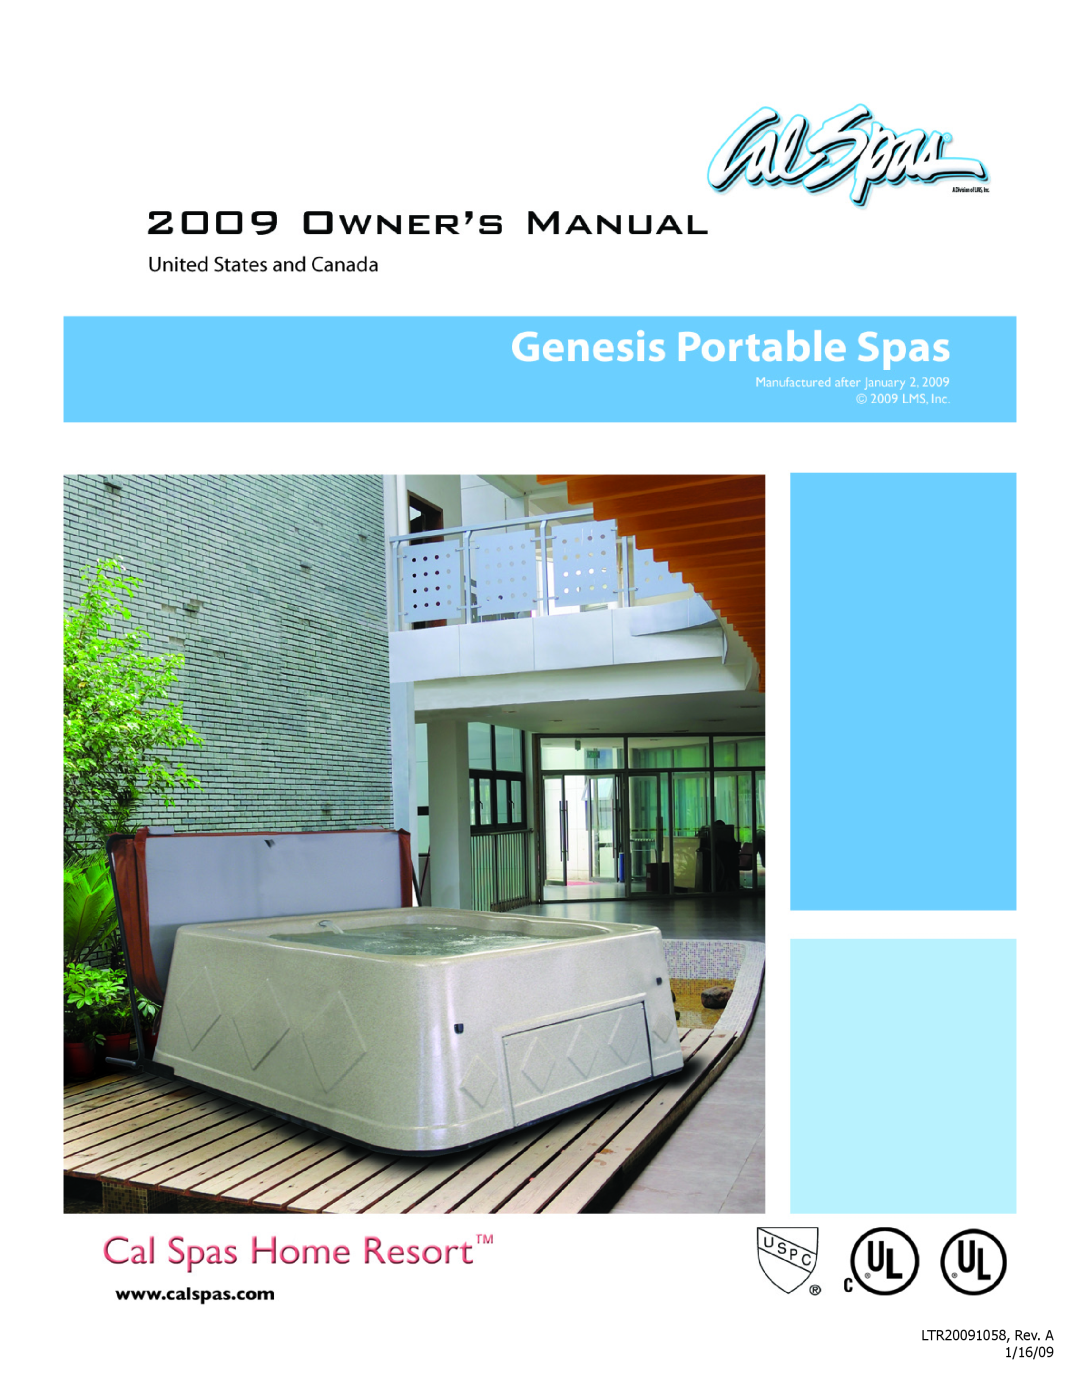 Cal Spas Genesis Portable Spa manual LTR20091058, Rev. A 1/16/09 